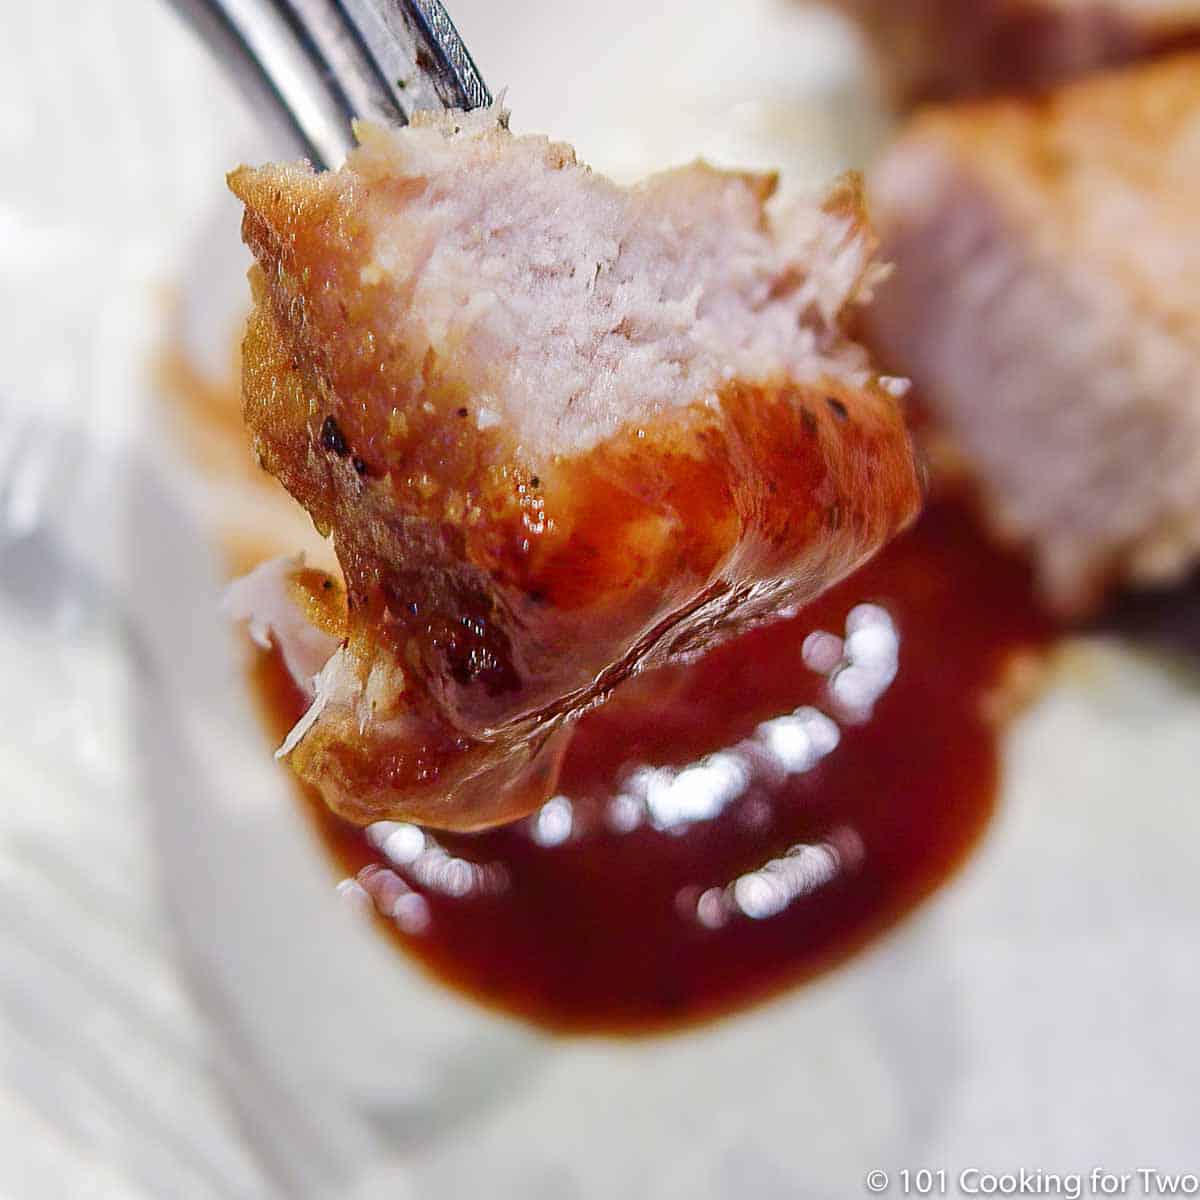 boneless pork rib bite on a fork.